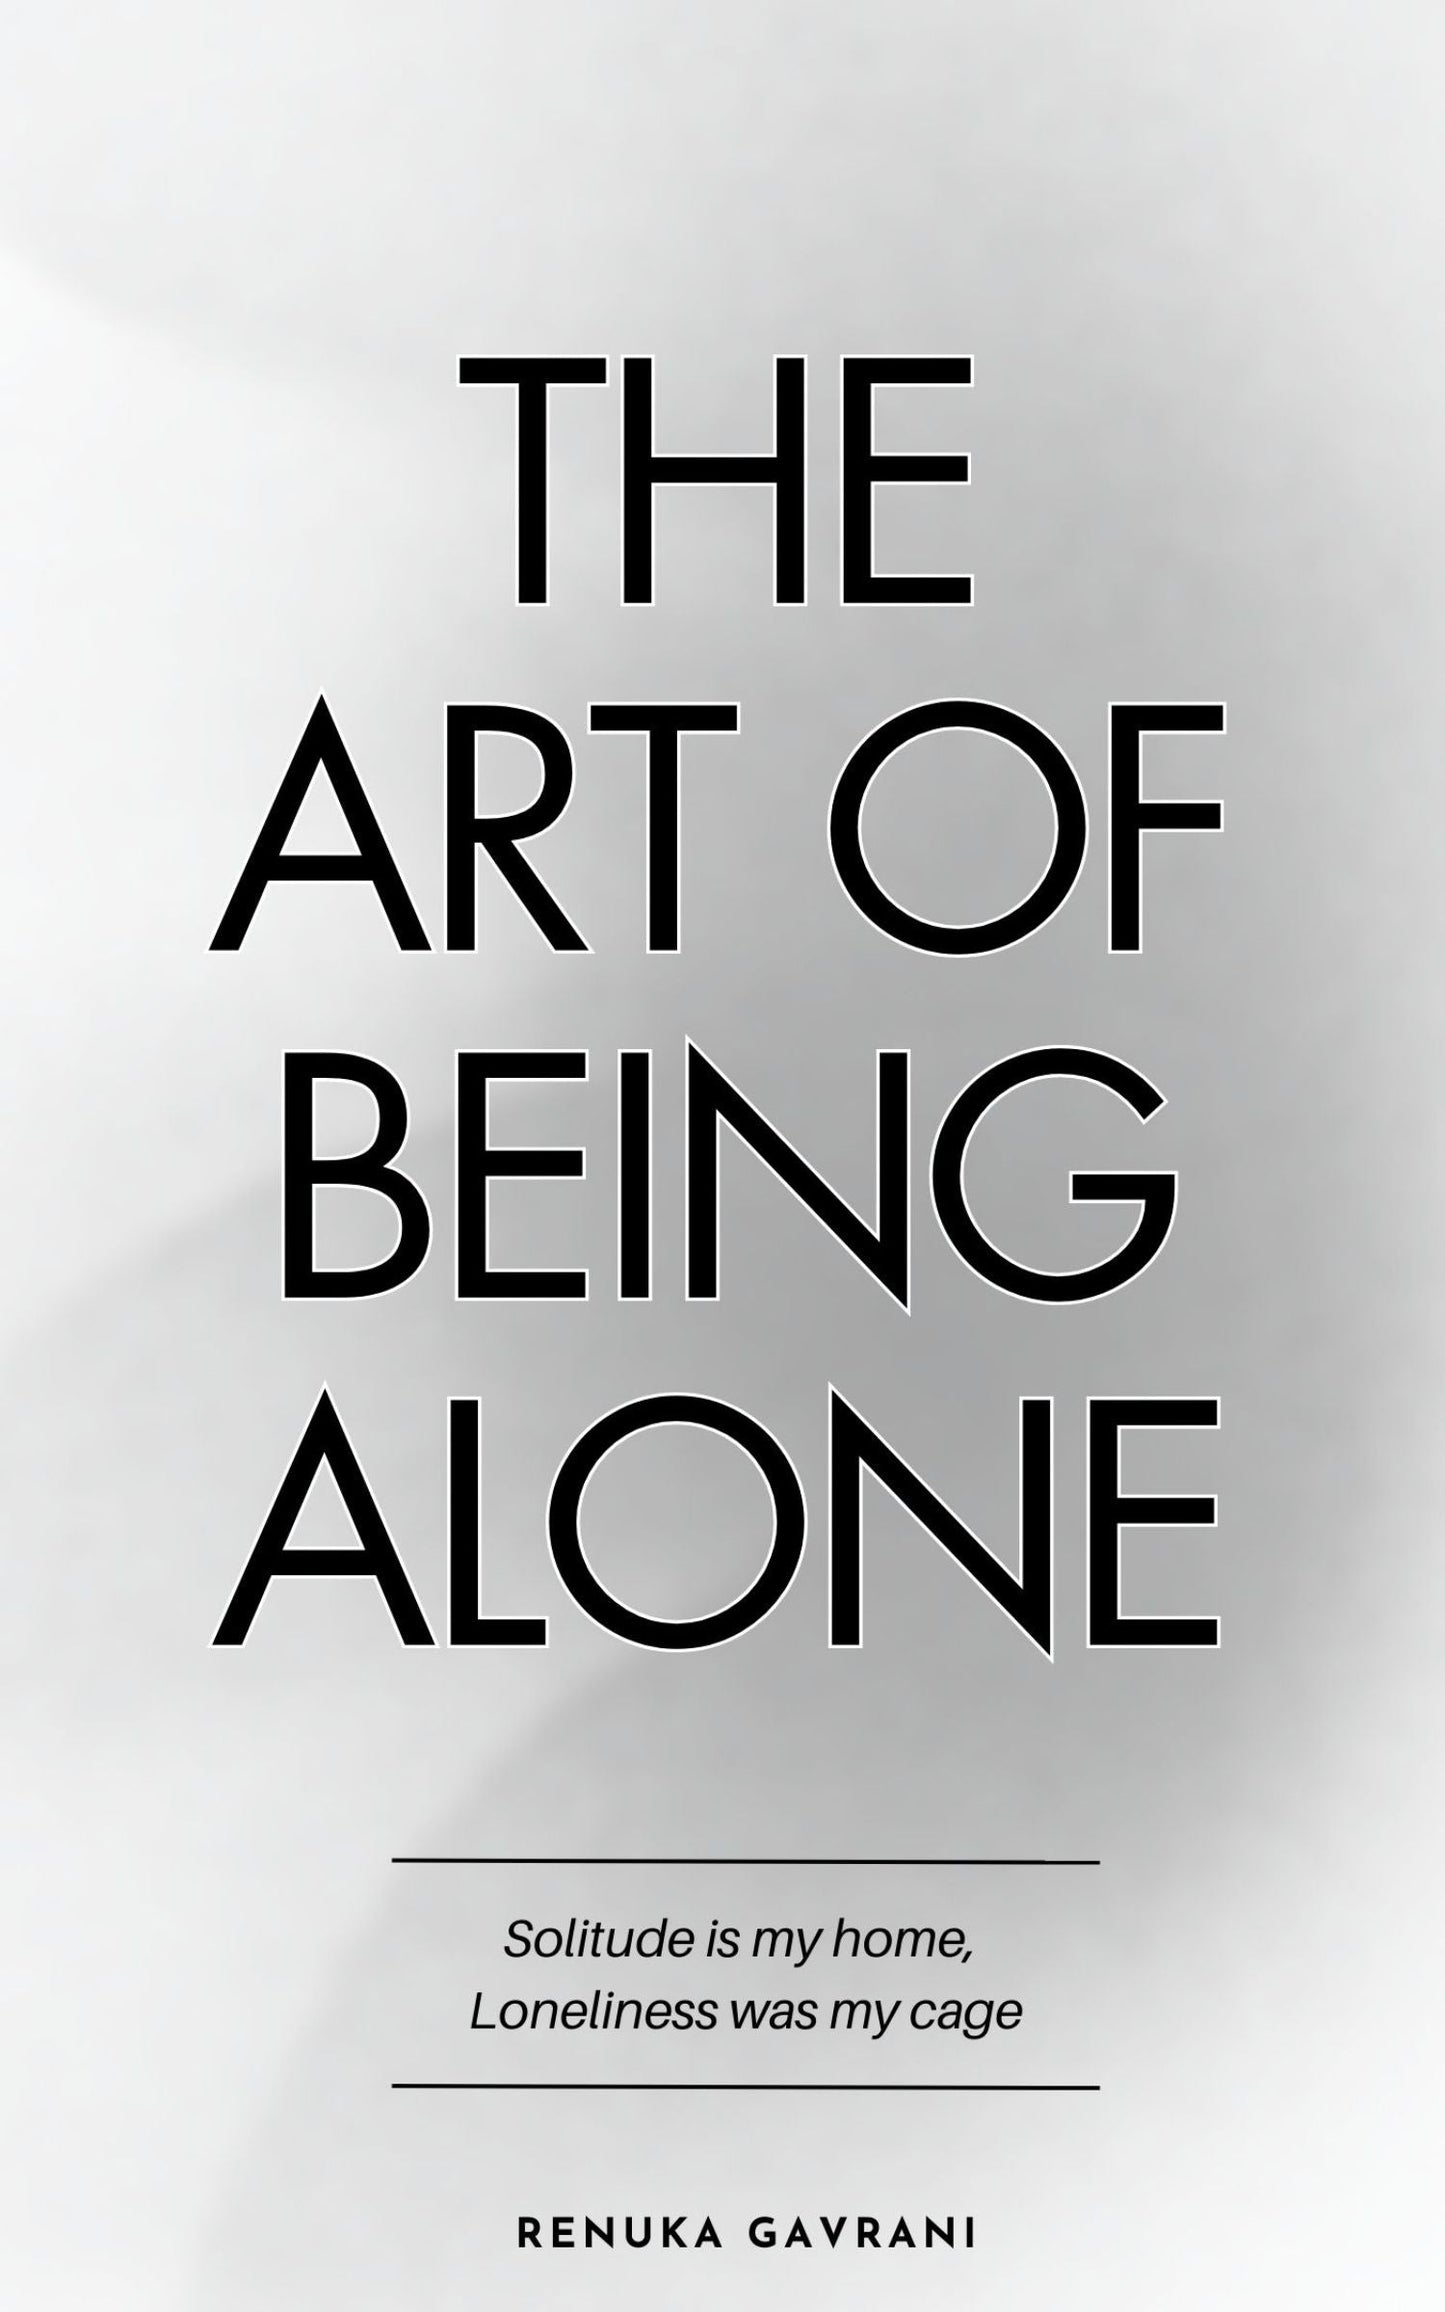 THE ART OF BEING ALONE By RENUKA GAVRANI